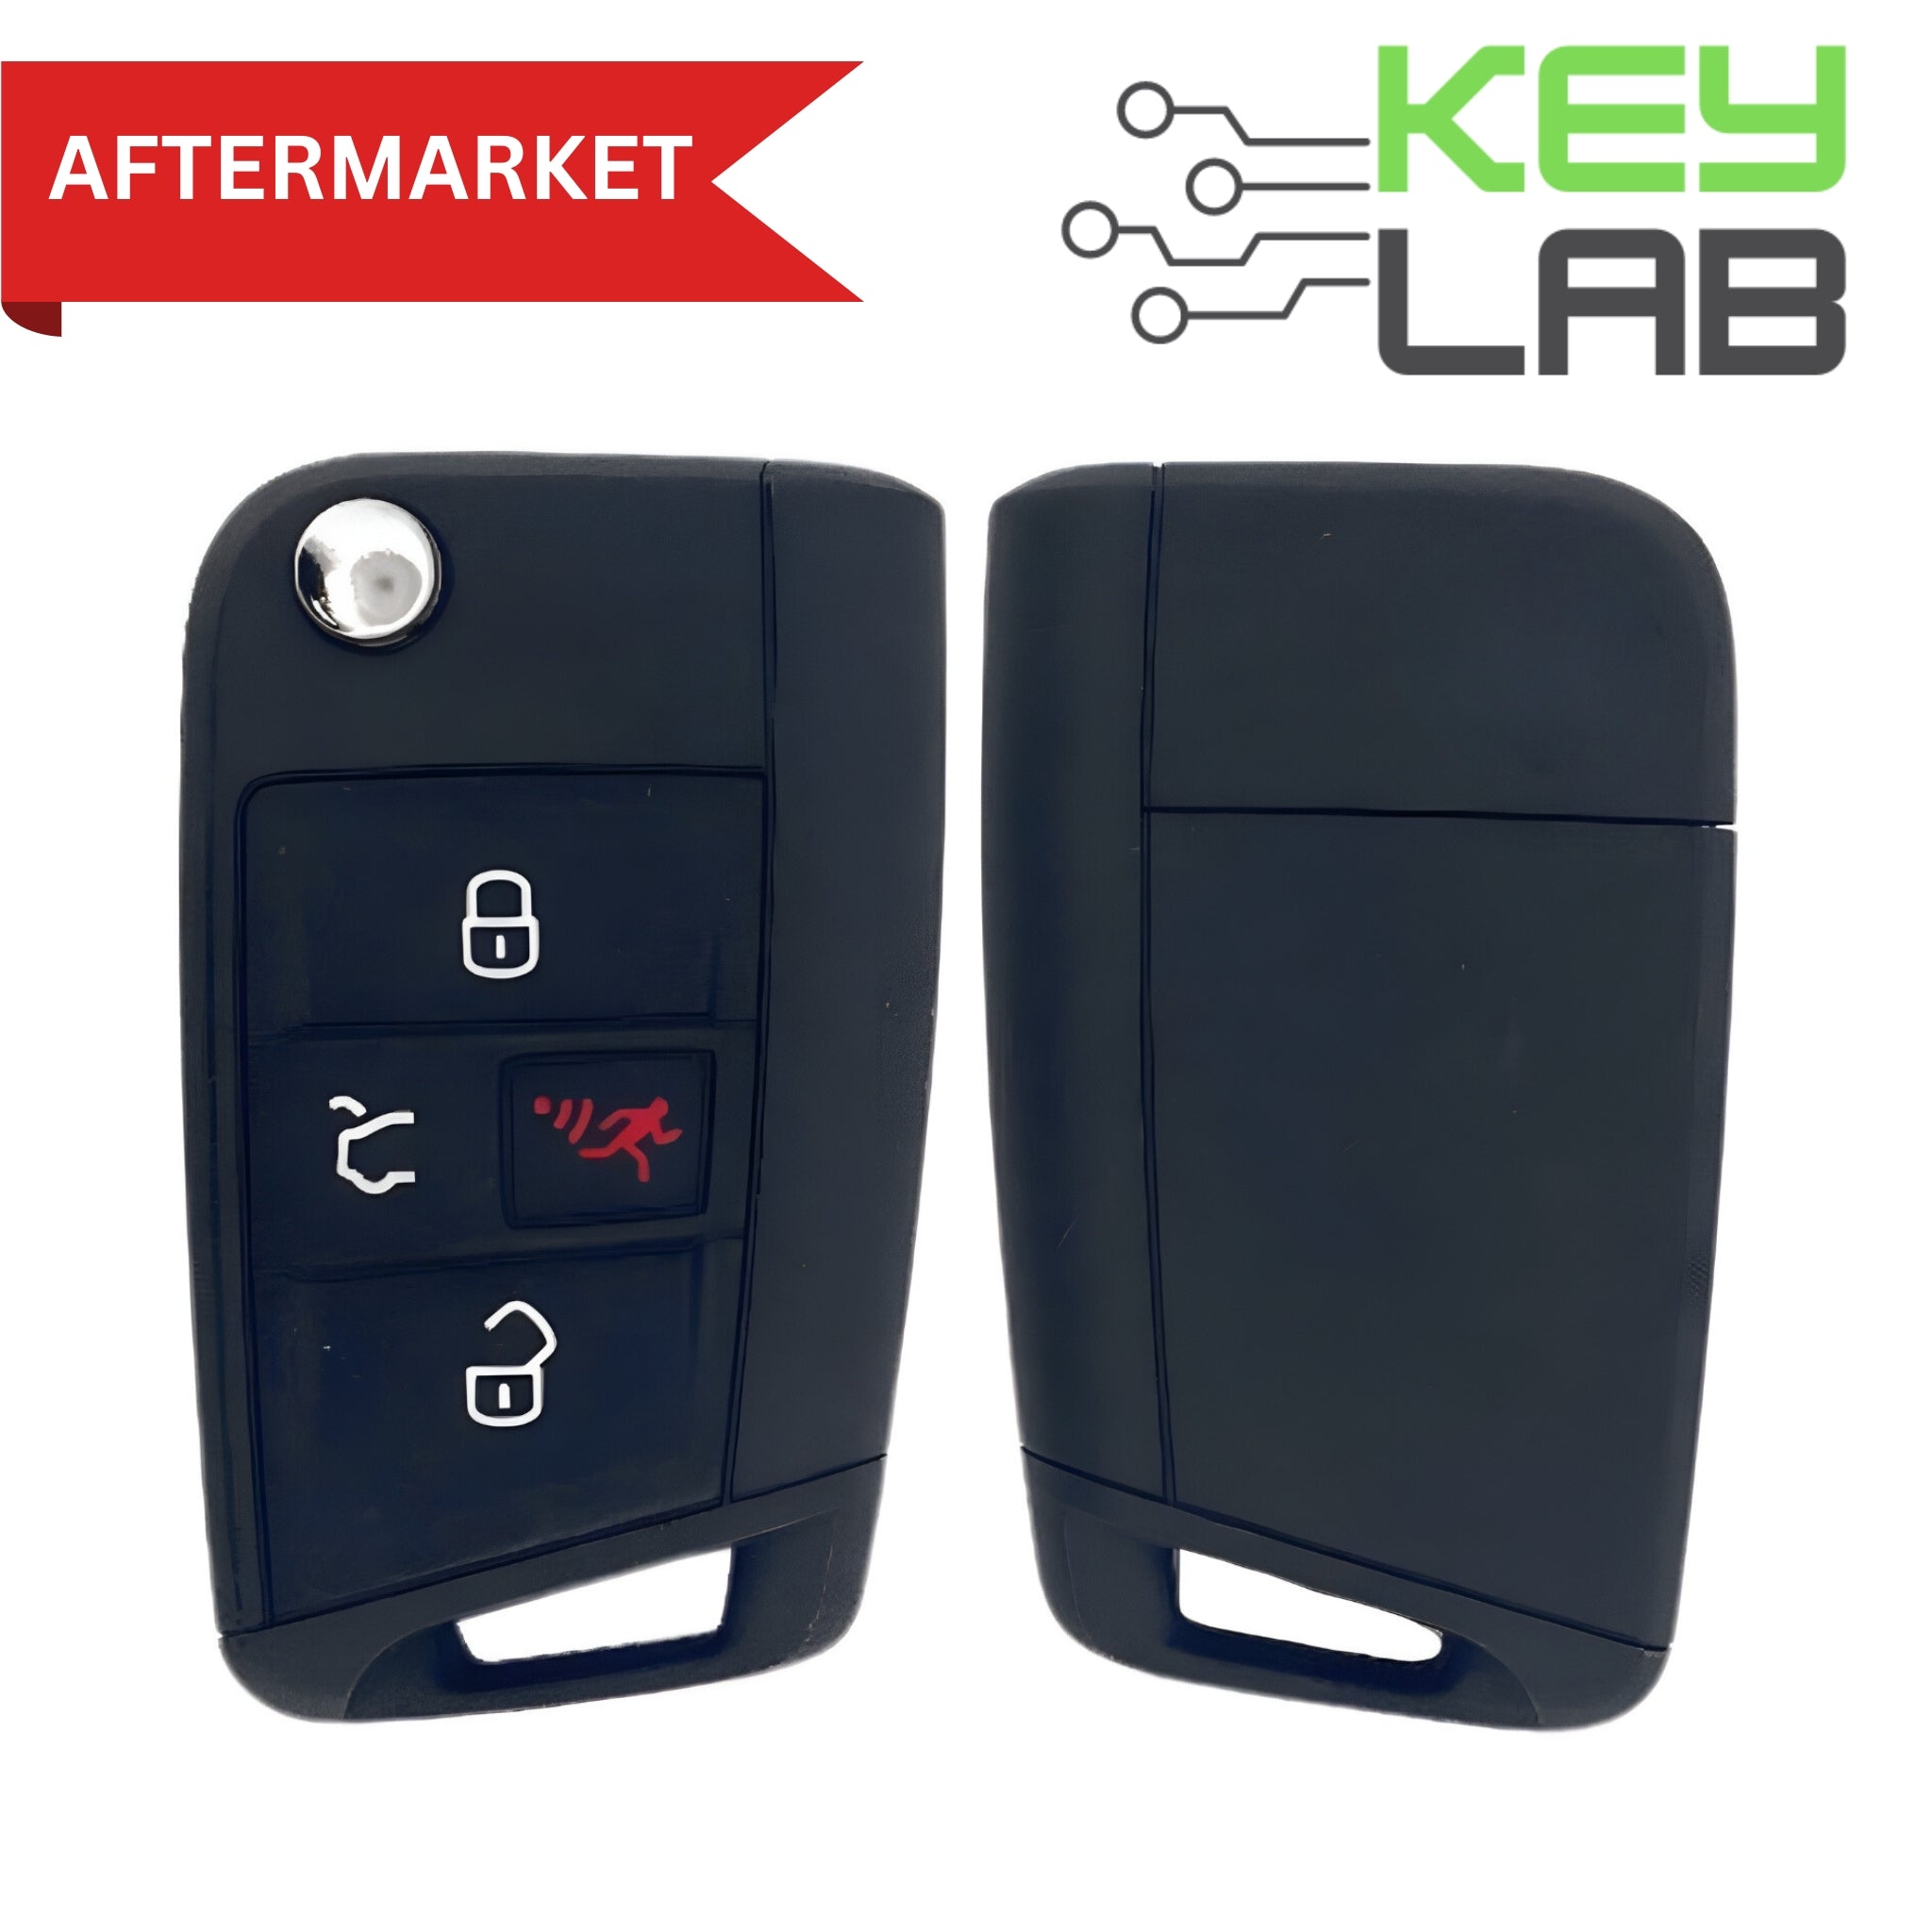 Volkswagen Aftermarket 2015-2019 Golf, Remote Flip Key 4B Trunk FCCID: NBGFS12P01 (Comfort Access) PN# 5G0 959 752 BE - Royal Key Supply